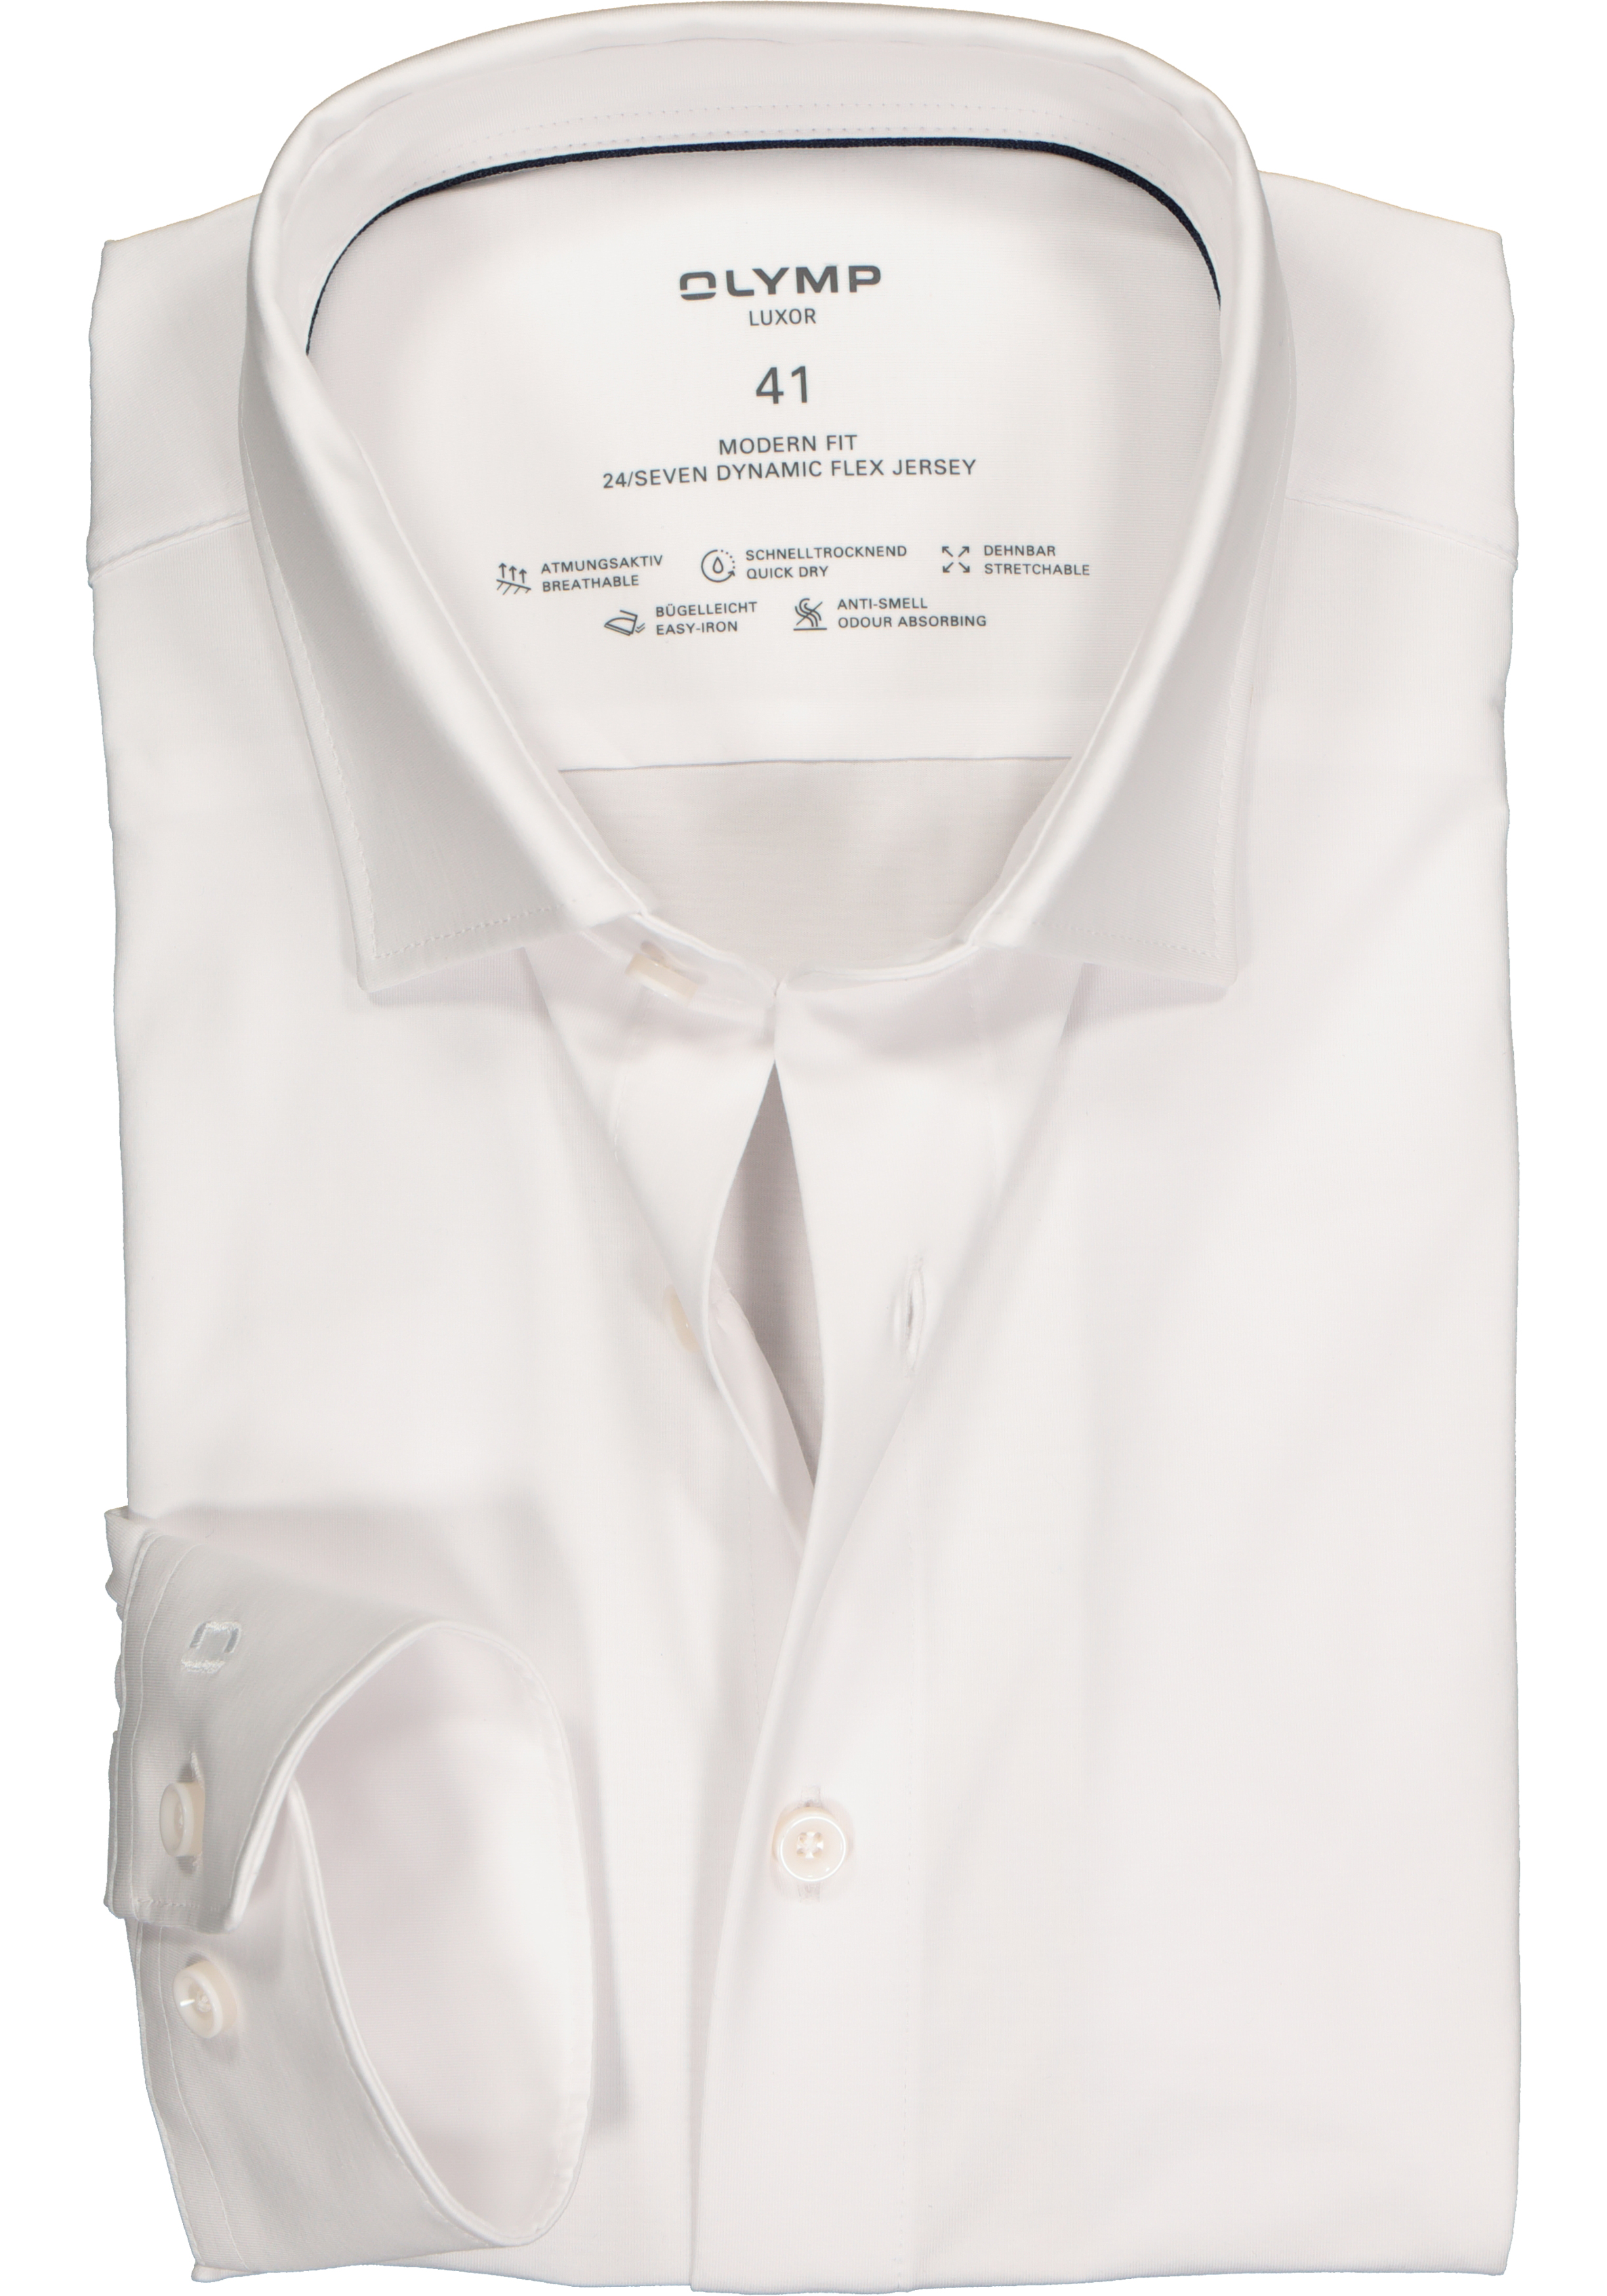 OLYMP Luxor modern fit overhemd 24/7, mouwlengte 7, wit